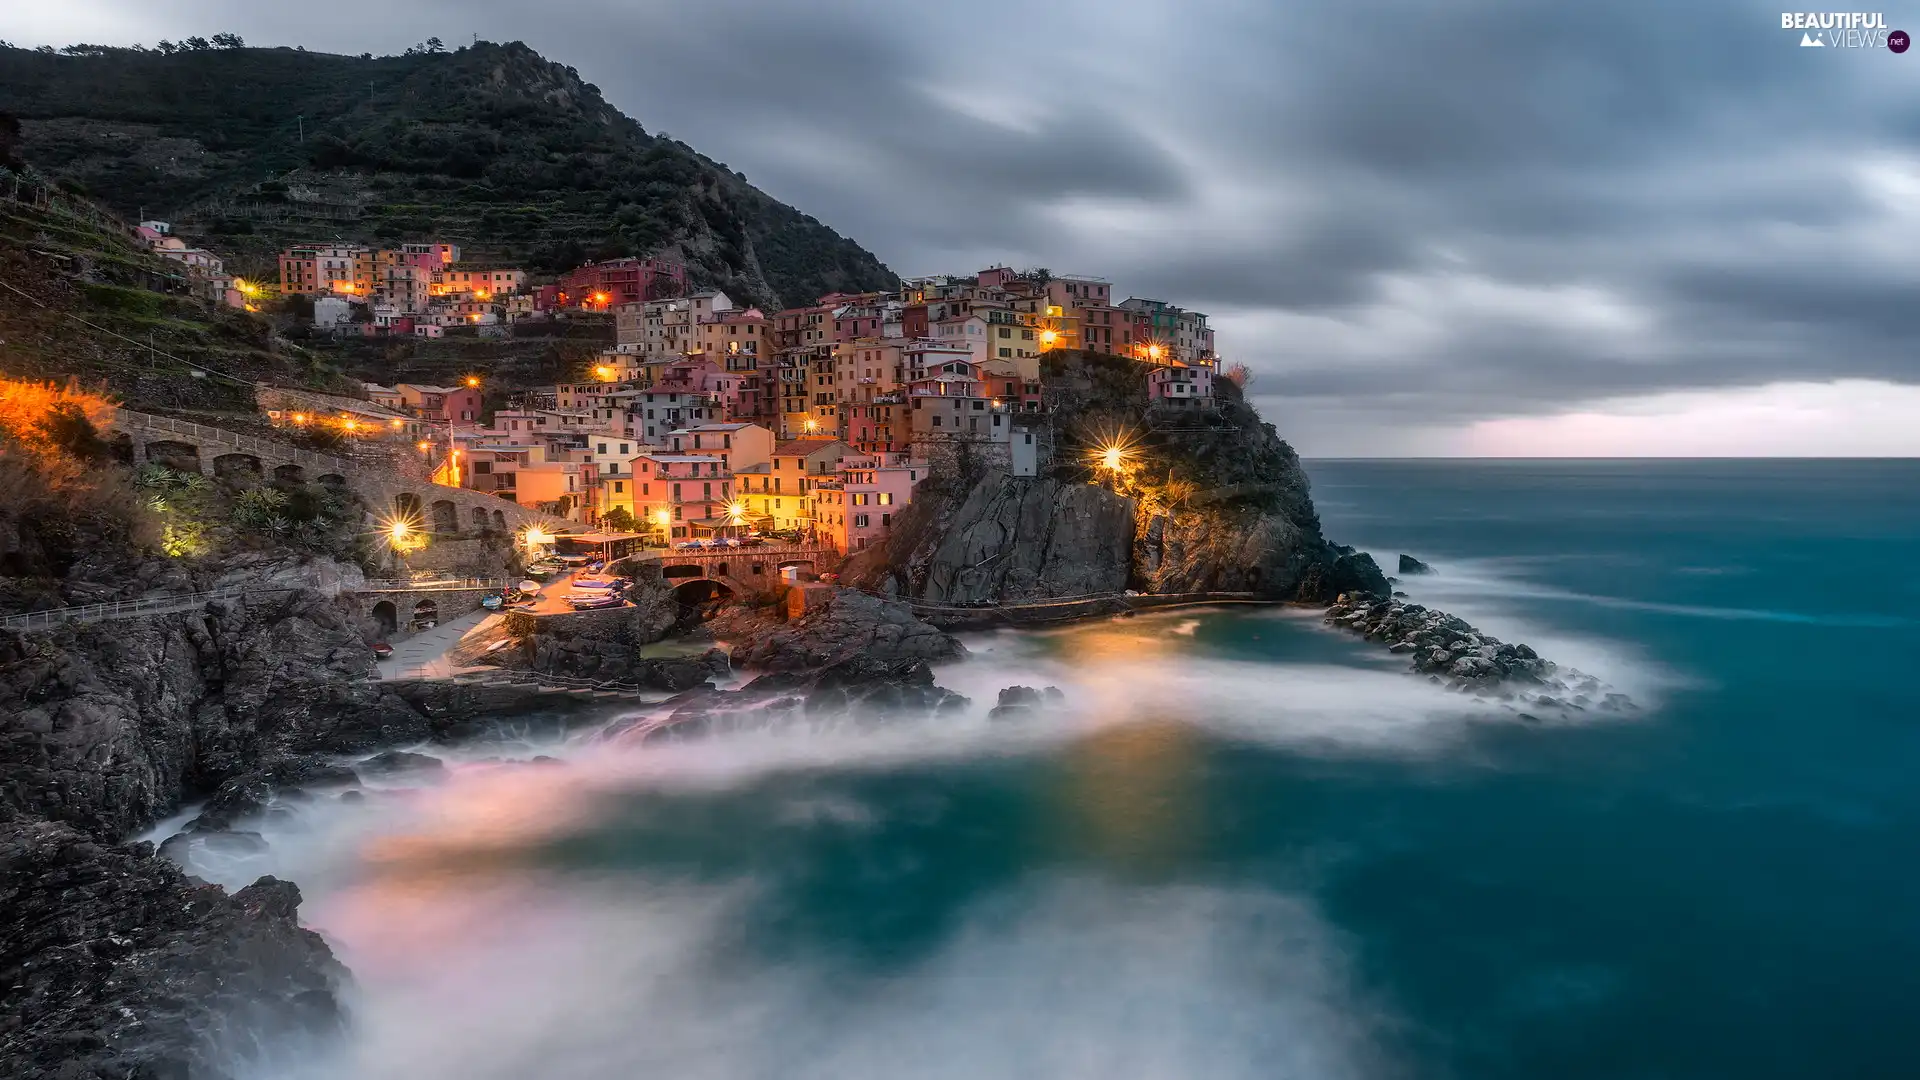 illuminated, Riomaggiore Municipality, Ligurian Sea, Manarola, Italy, Houses, rocks